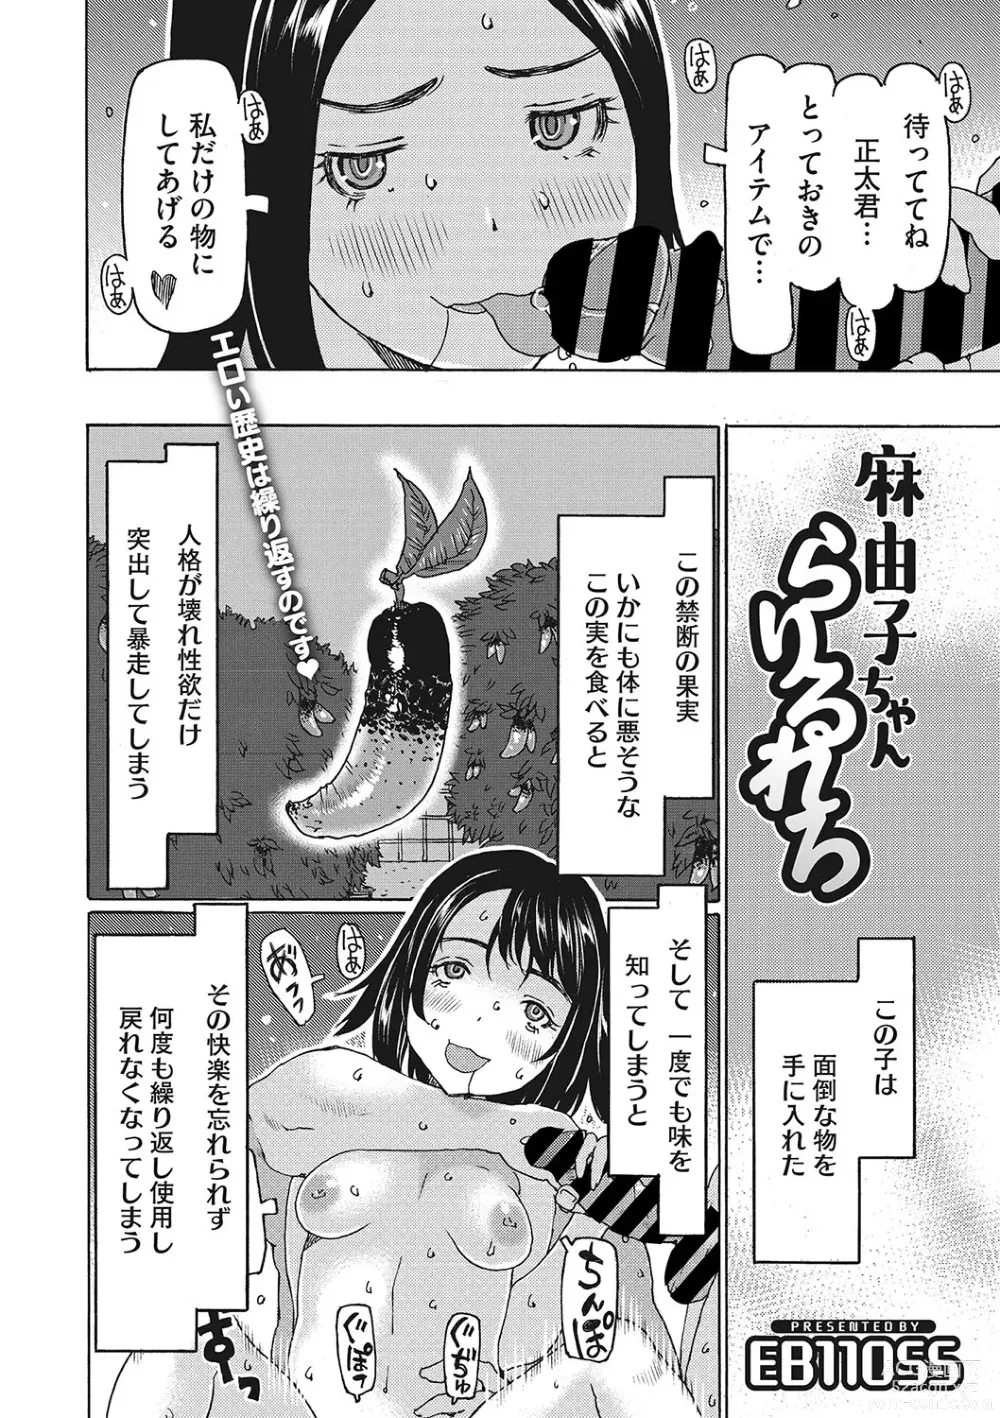 Page 5 of manga Little Girl Strike Vol. 29